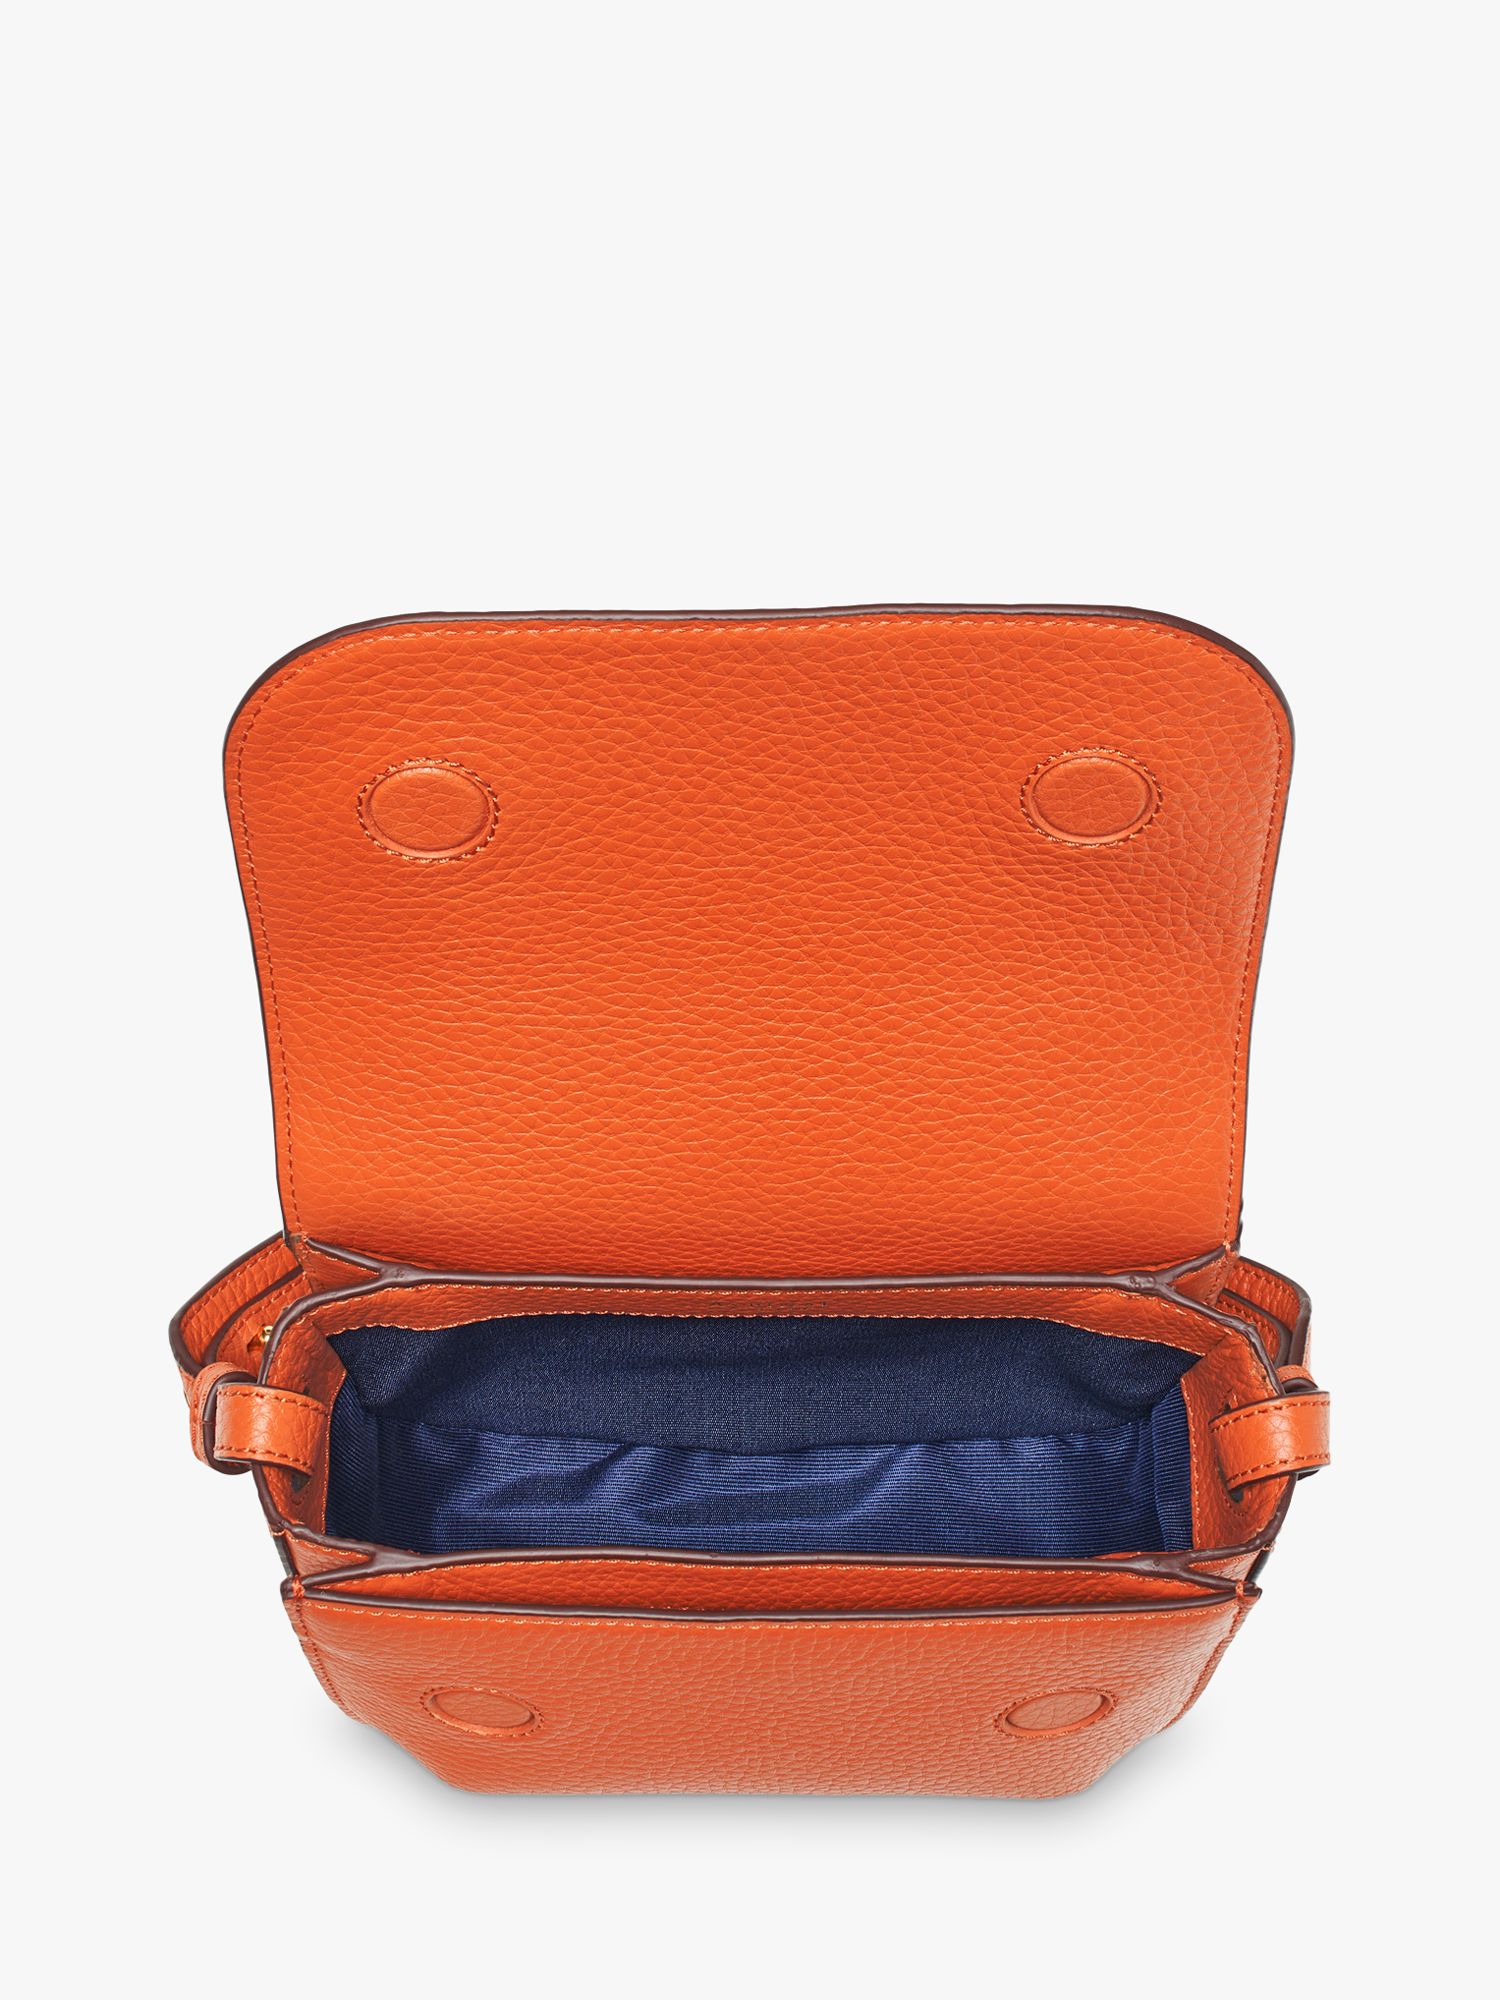 Buy Aspinal of London Ella Pebble Leather Crossbody Bag Online at johnlewis.com